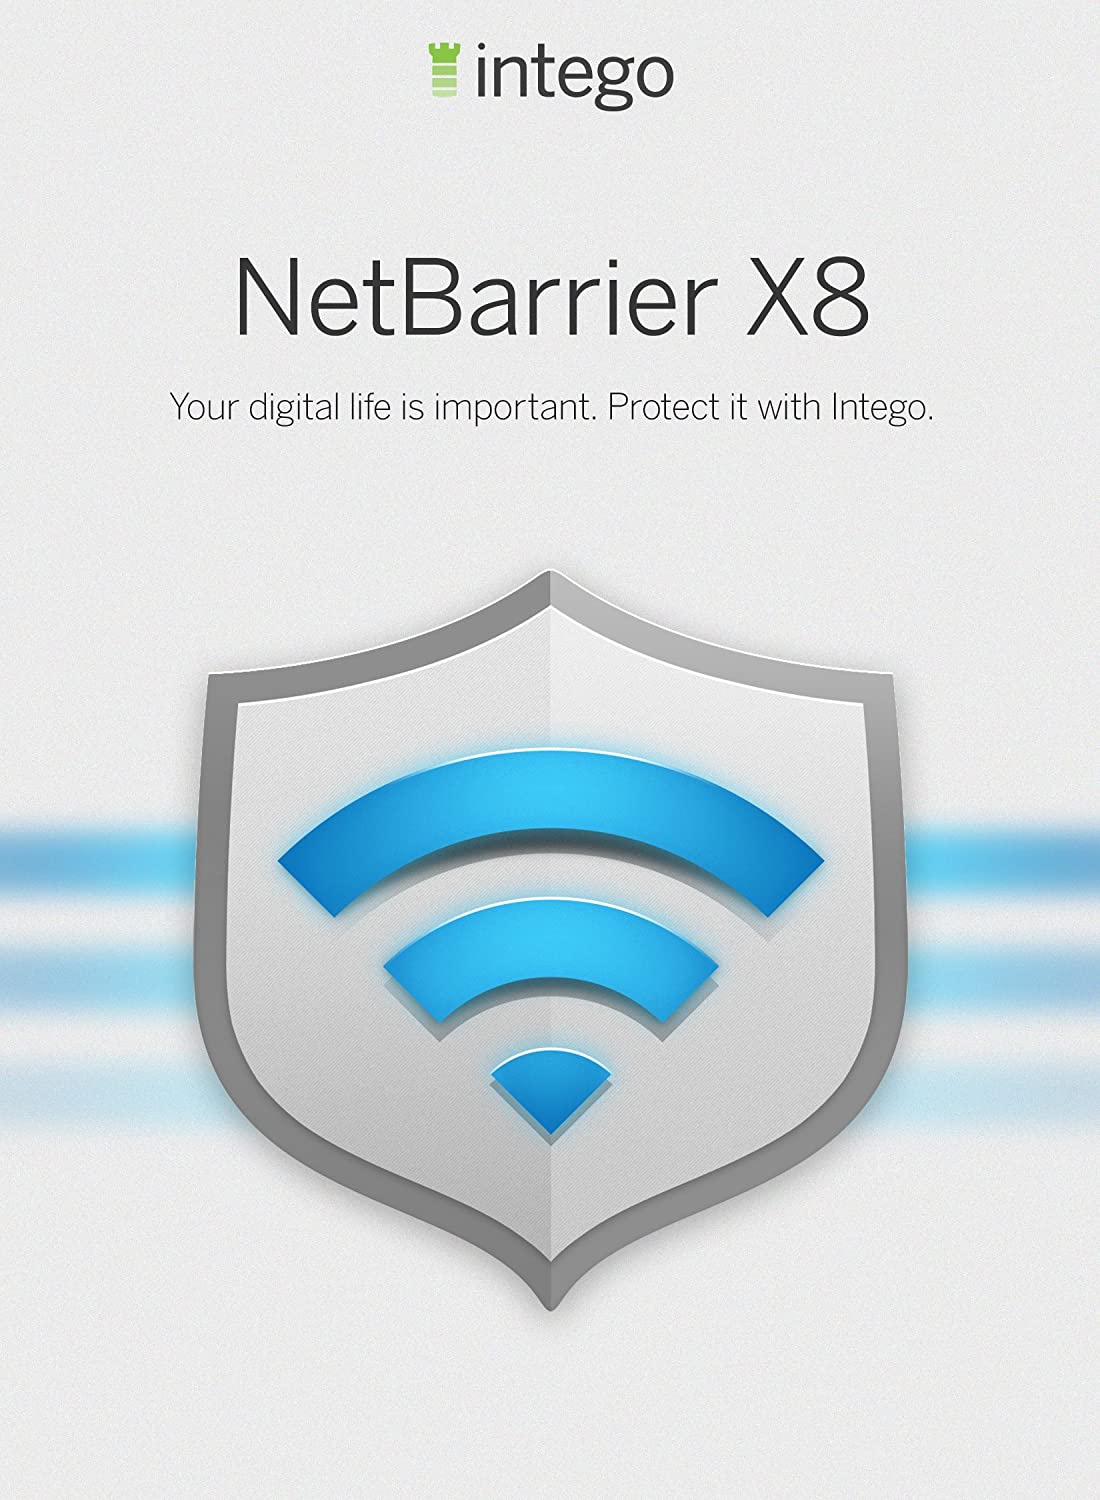 intego mac internet security x8 download